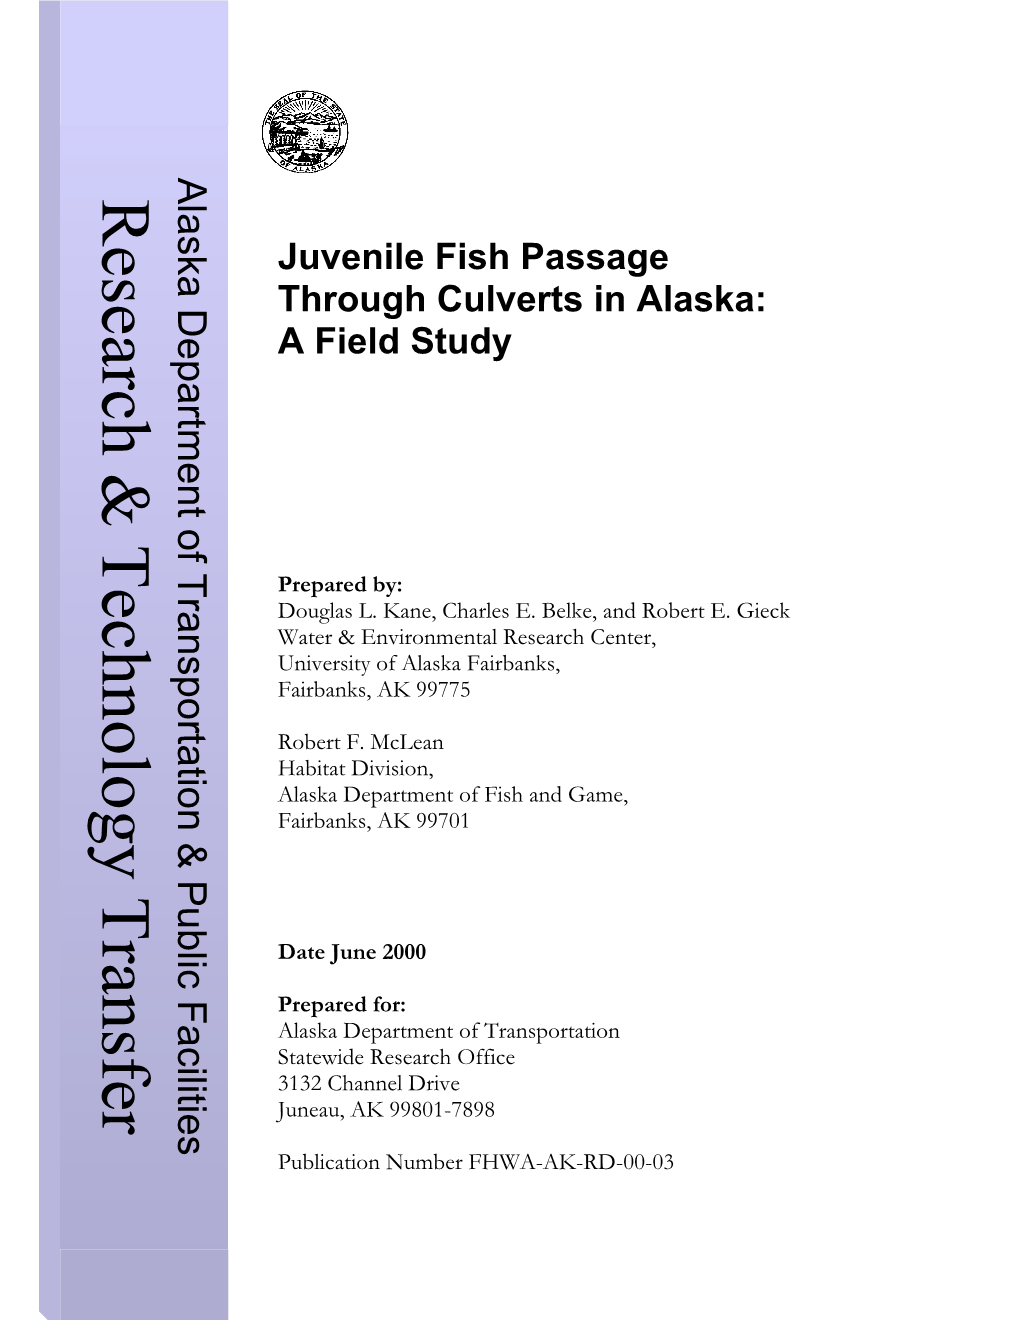 Juvenile Fish Passage Through Culverts in Alaska: a Field Study